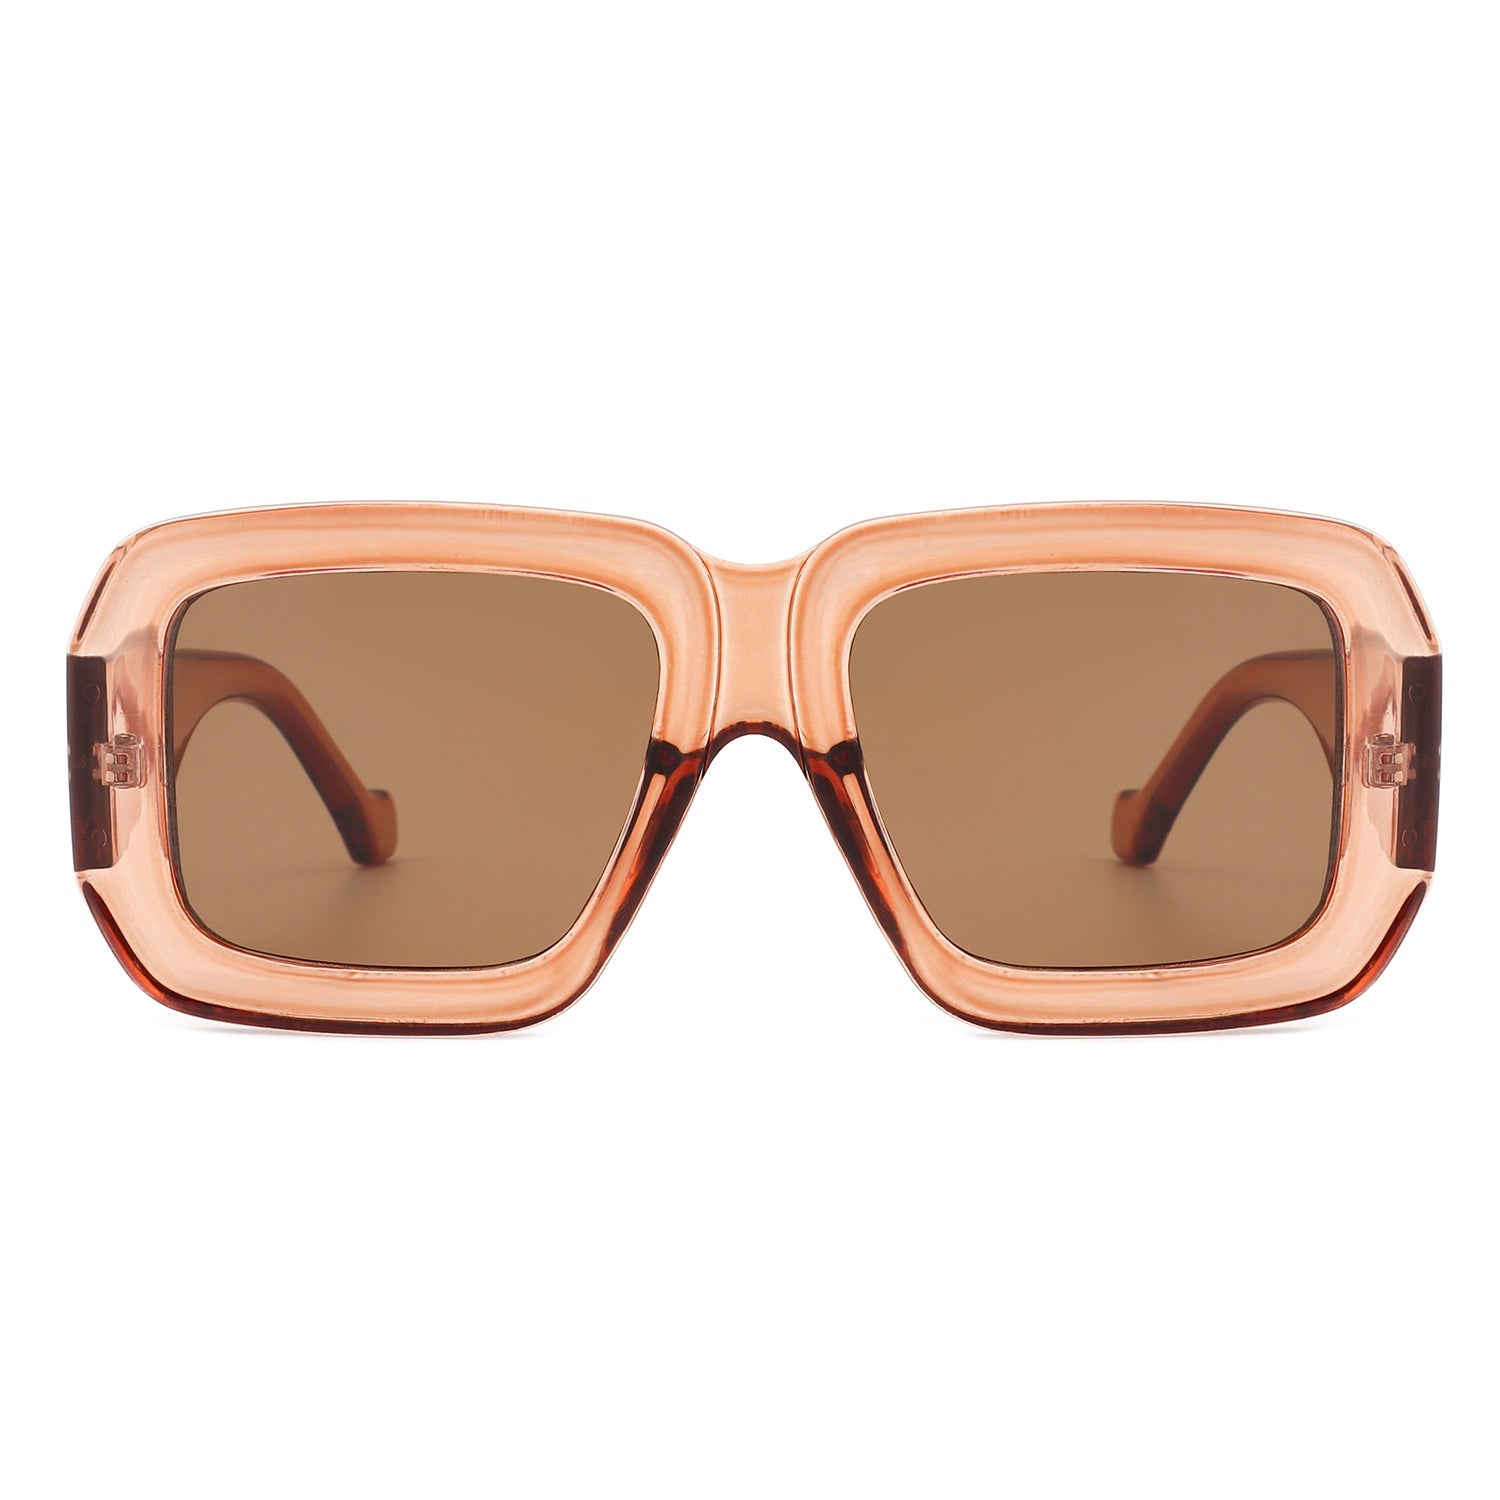 light brown sunglasses